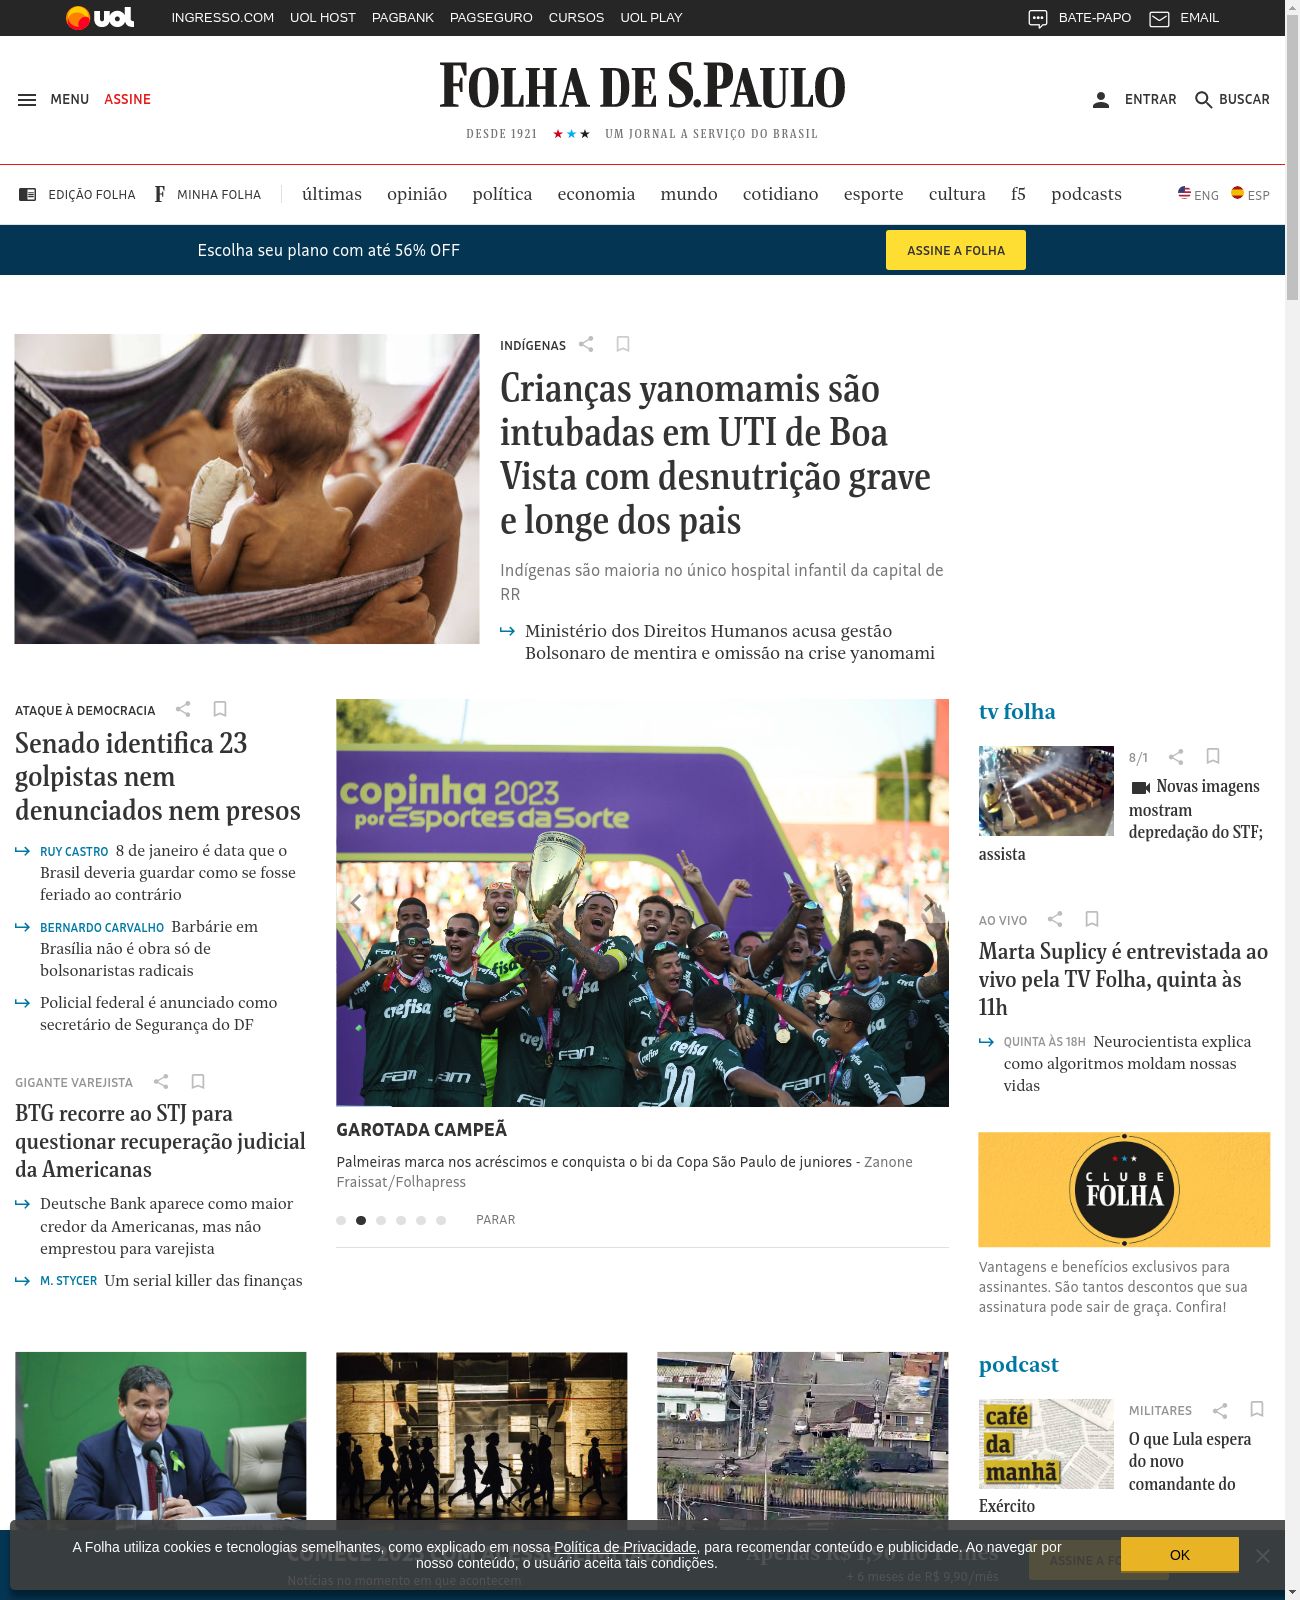 Folha de S.Paulo at 2023-01-25 22:53:31-03:00 local time